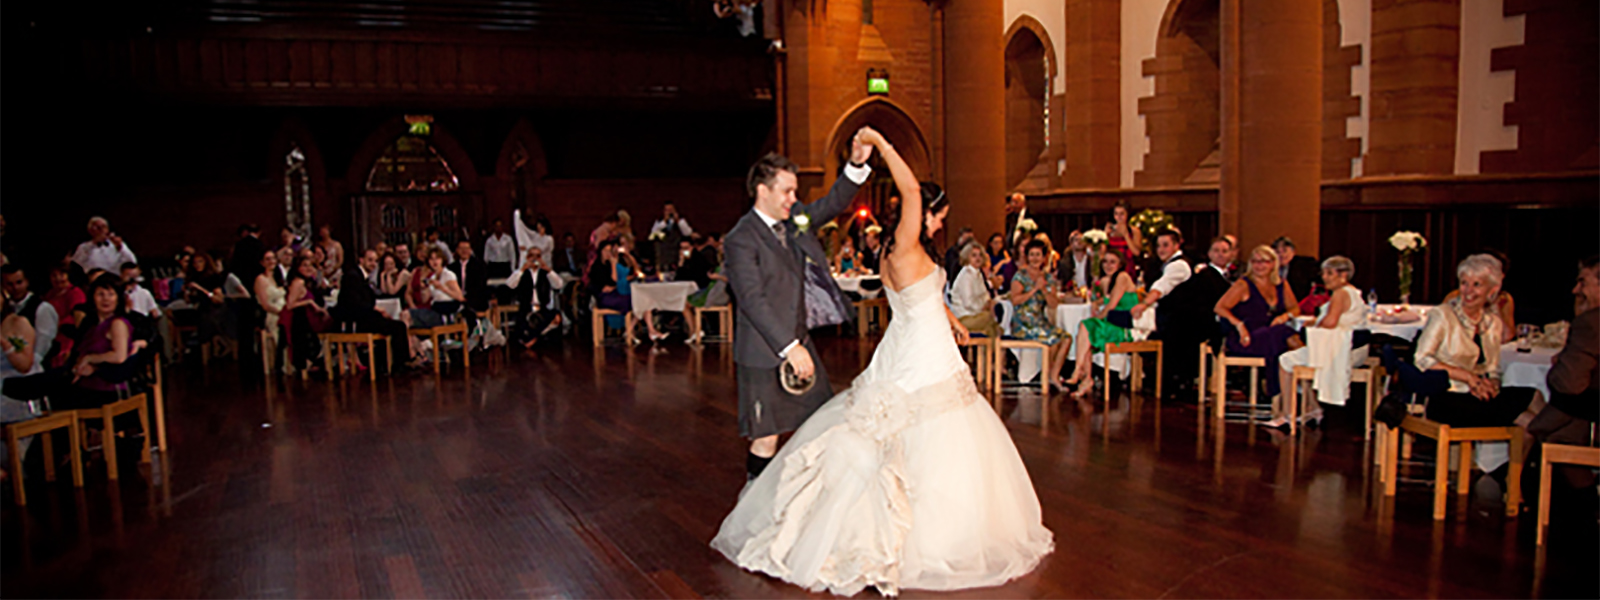 Wedding reception at Barony Hall. Photo courtesy of Team Thomson Photography